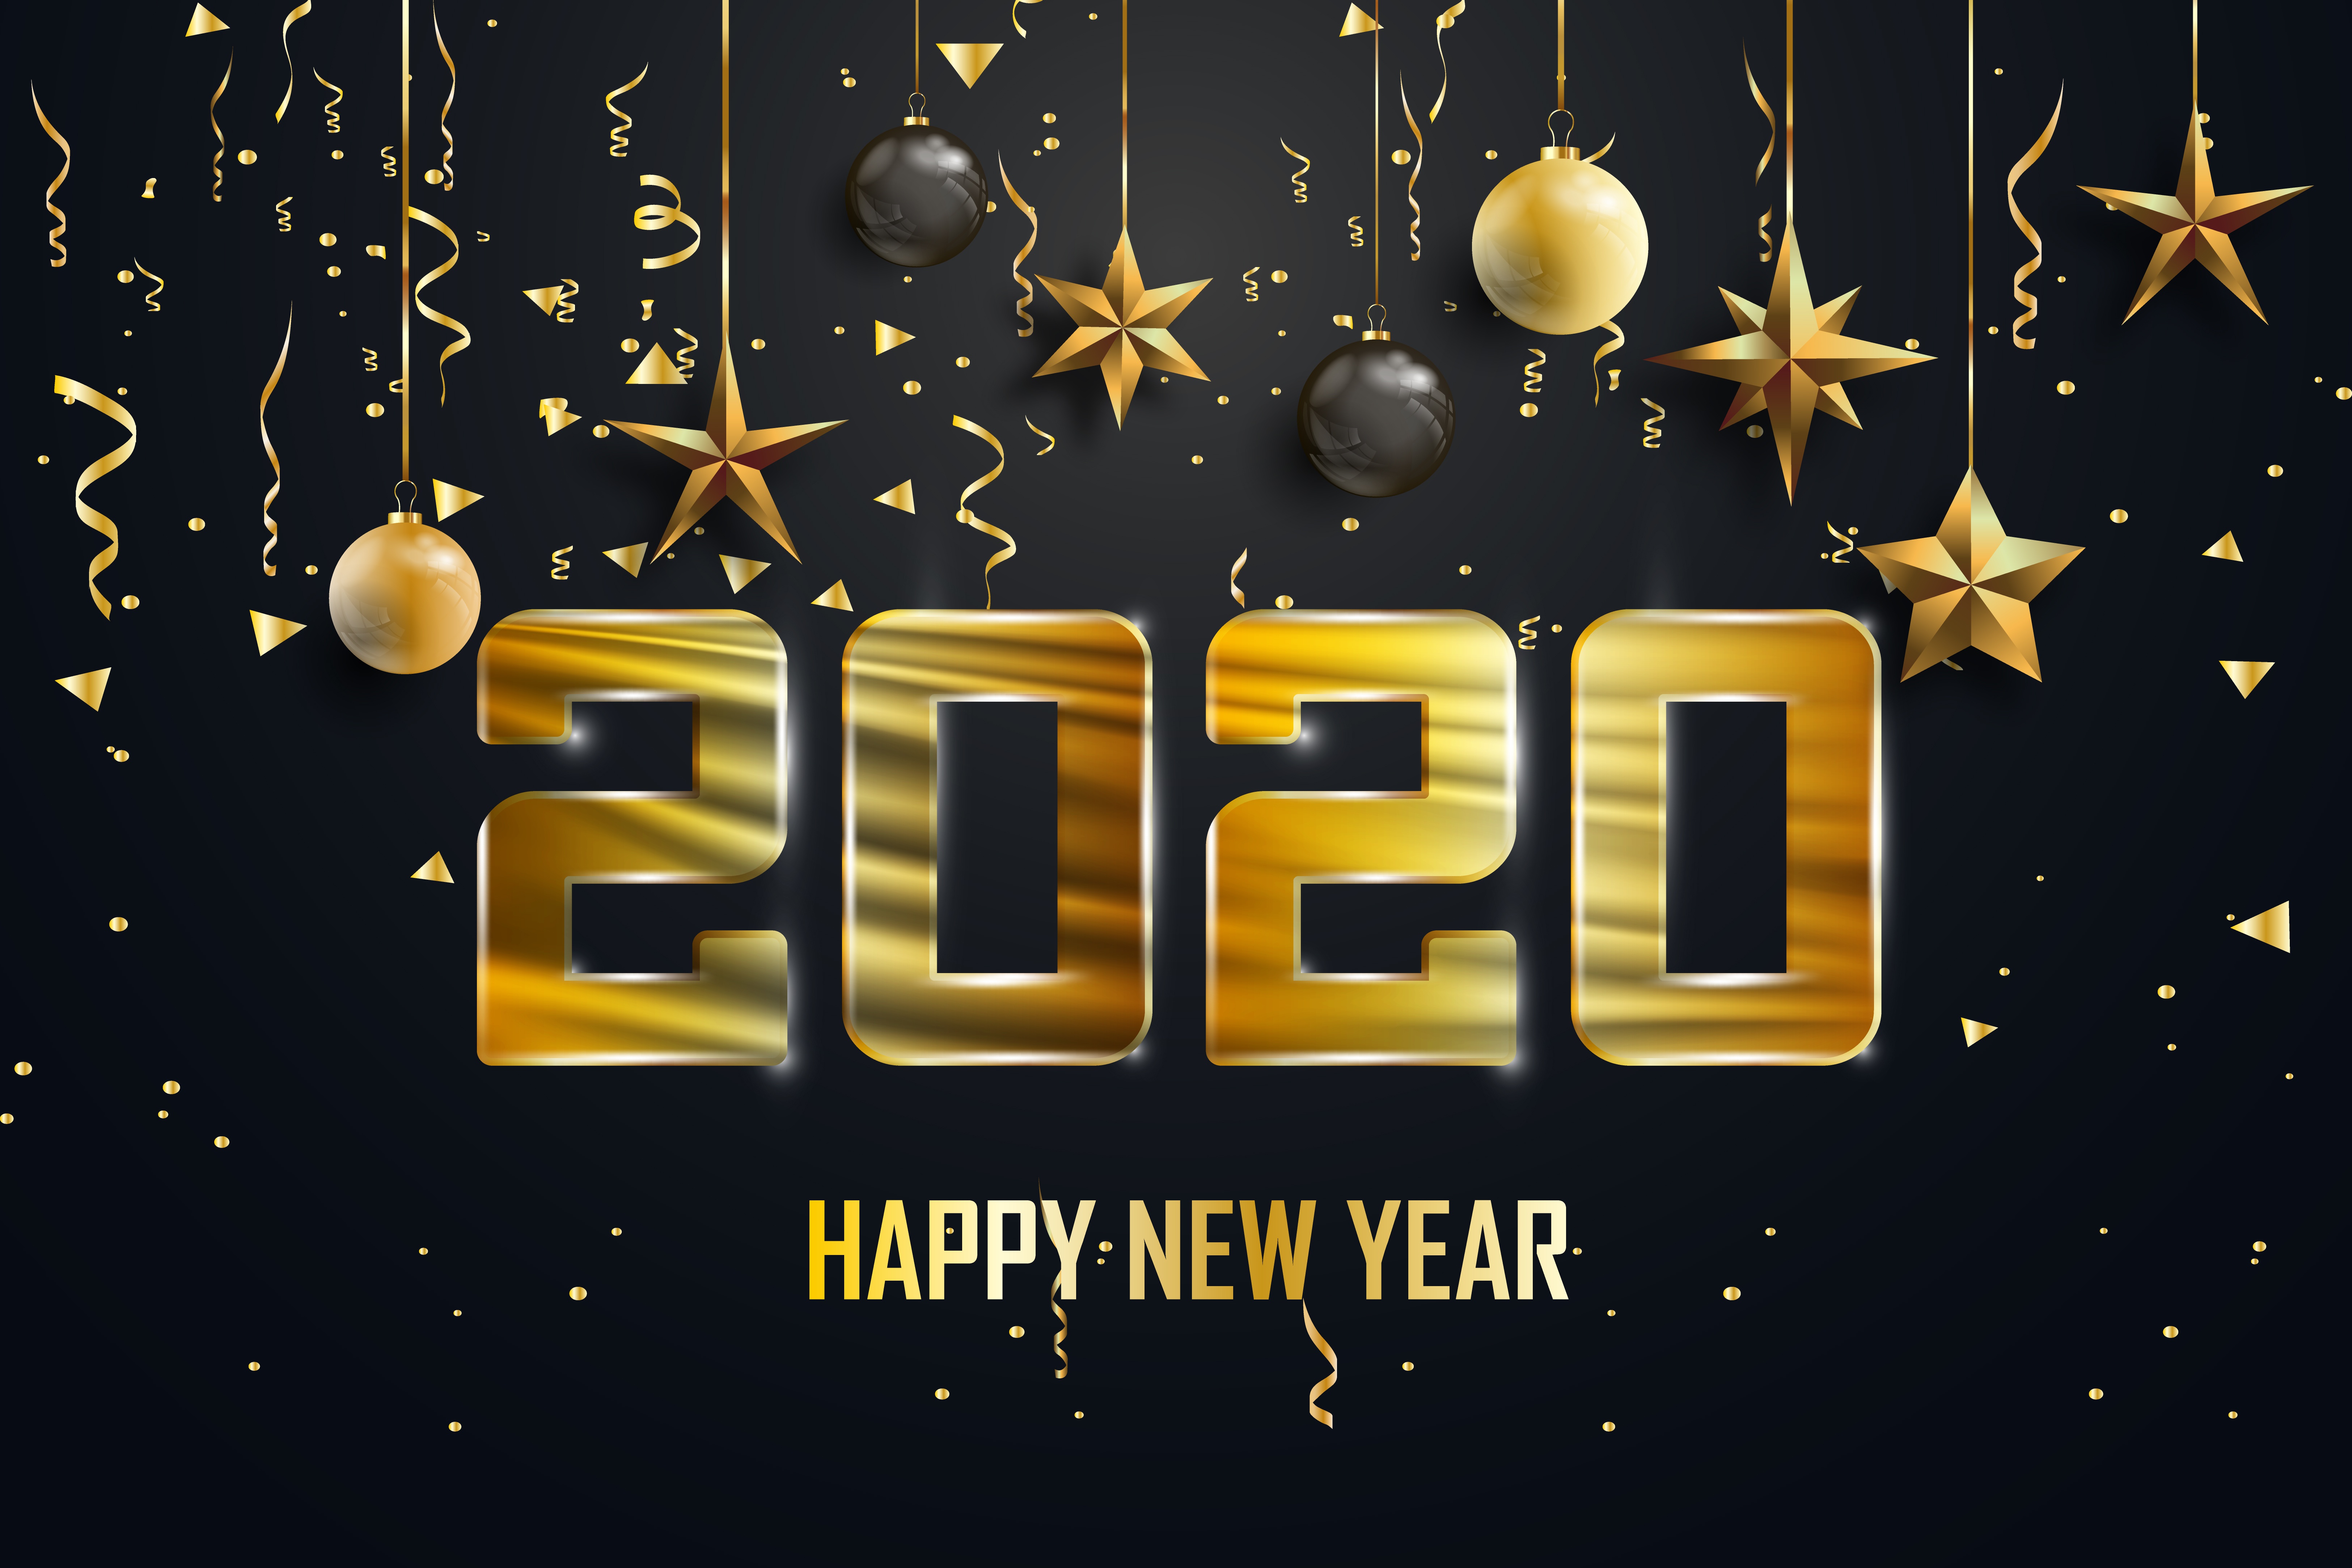 4k New Year 2020 Photos